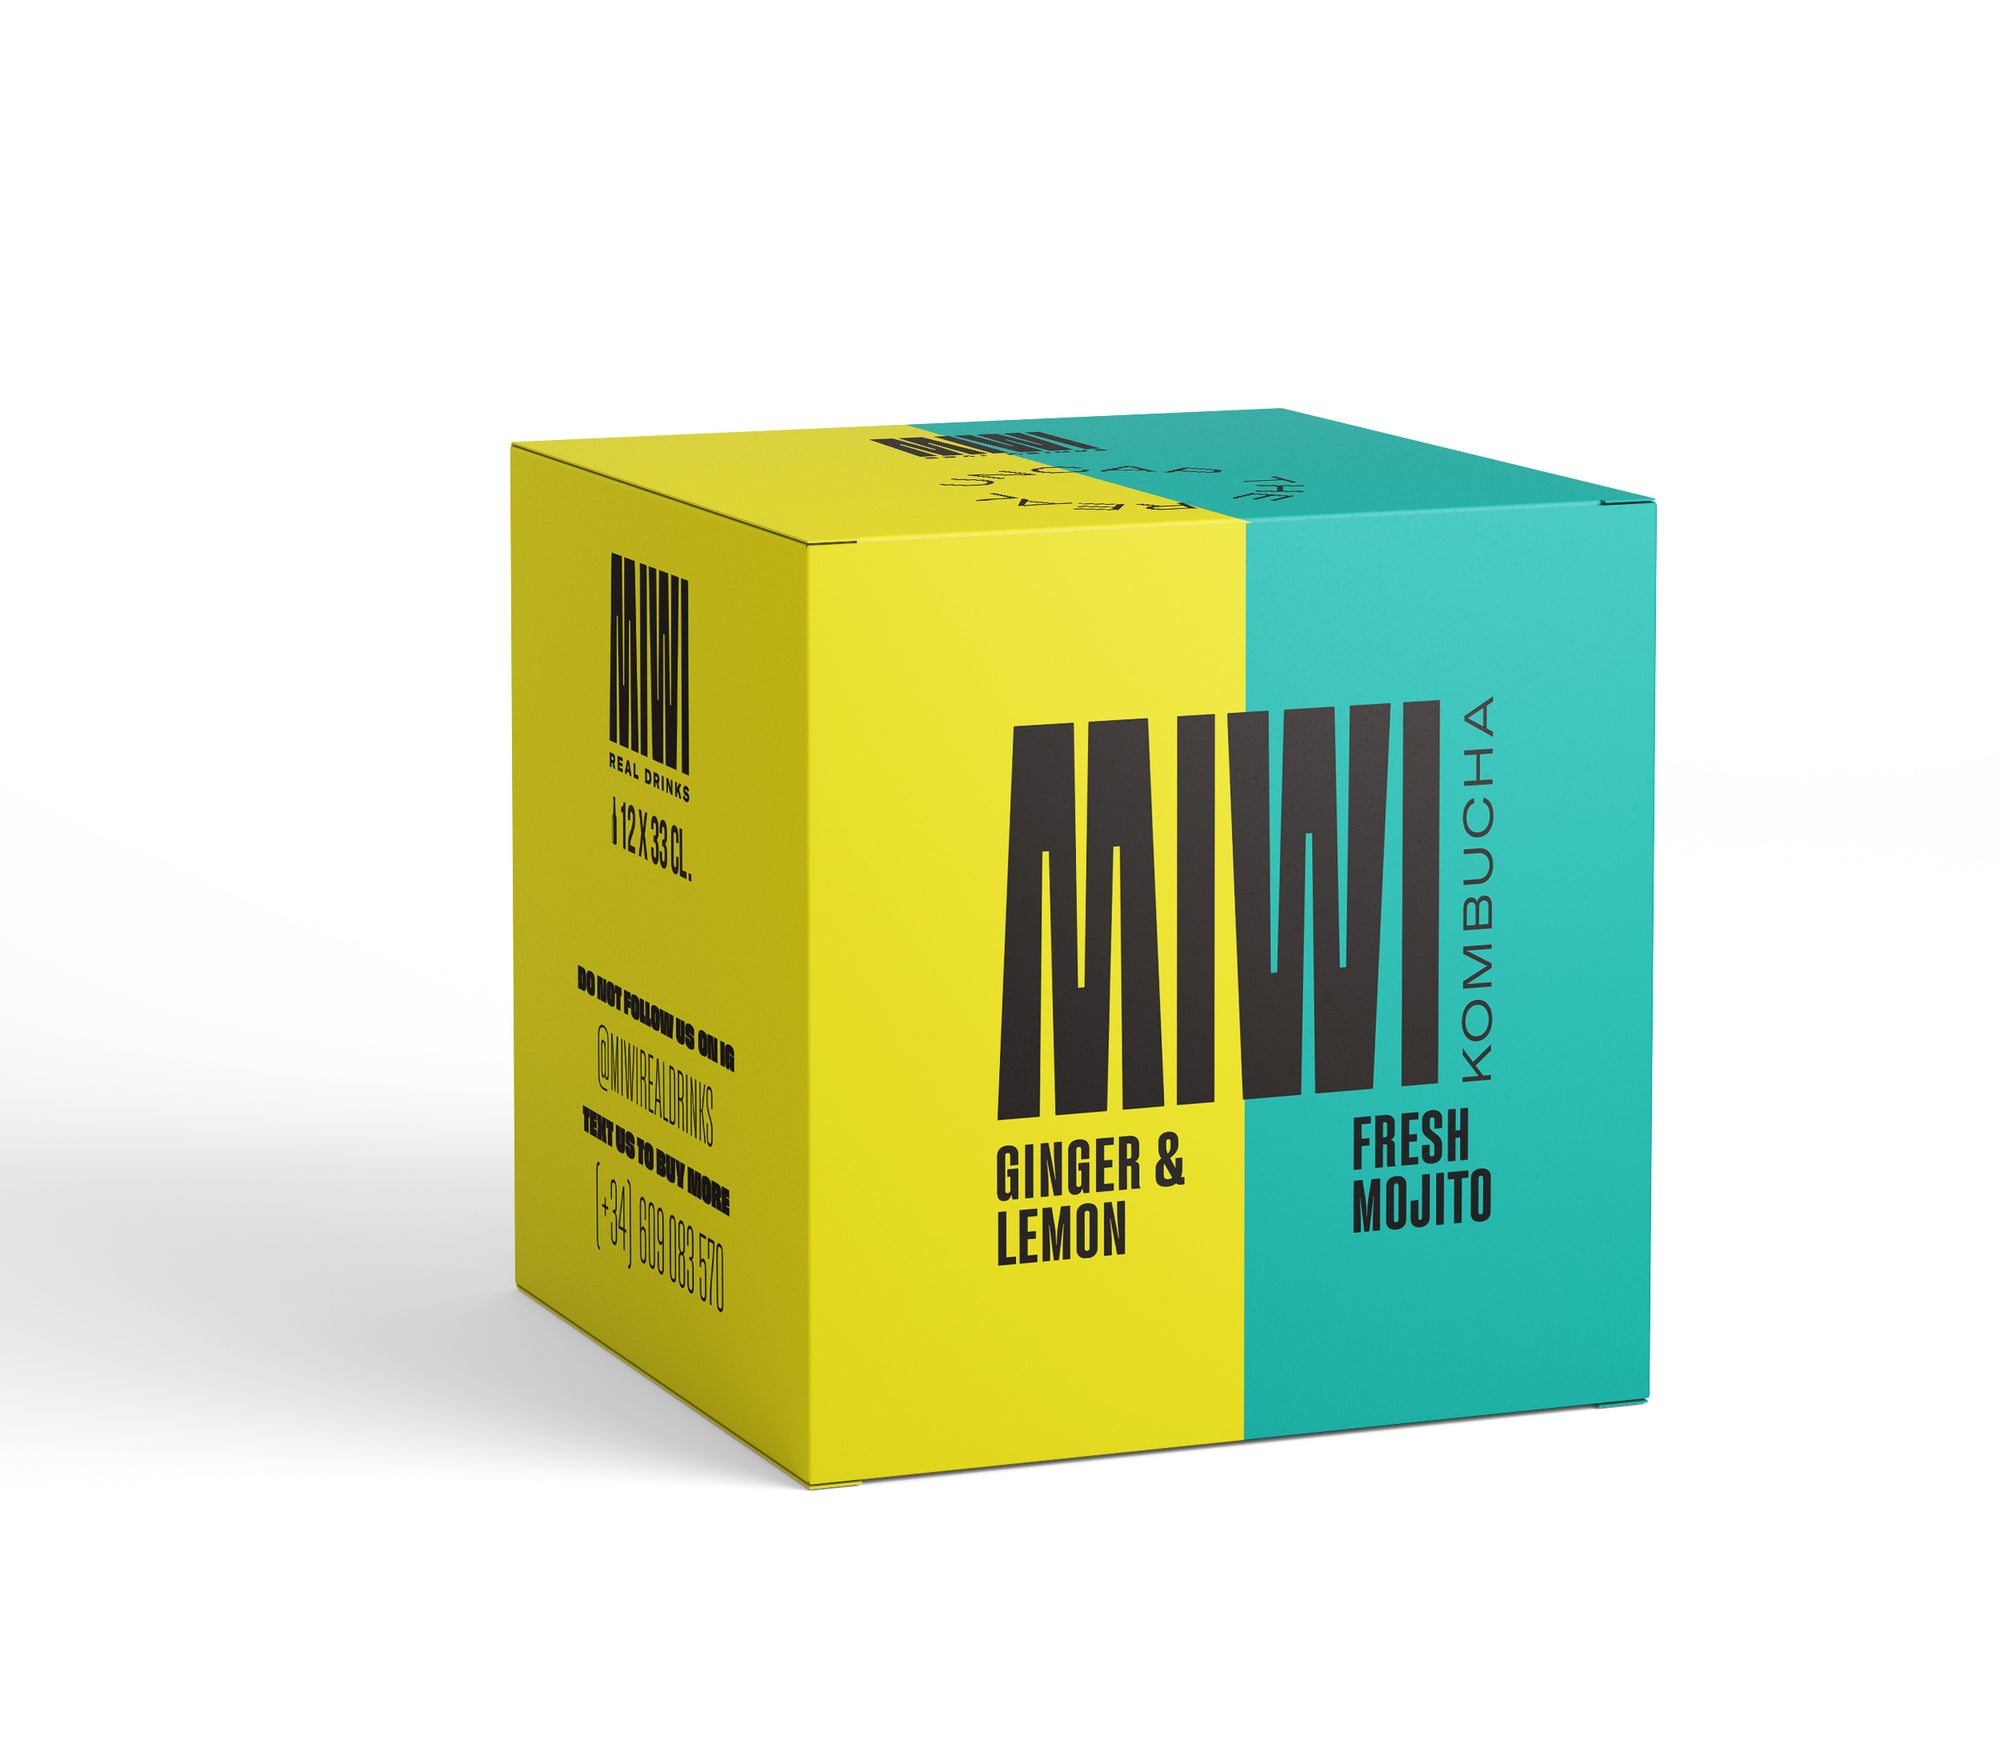 Caja doble Fresh Mojito & Ginger Lemon - MIWI REAL DRINKS